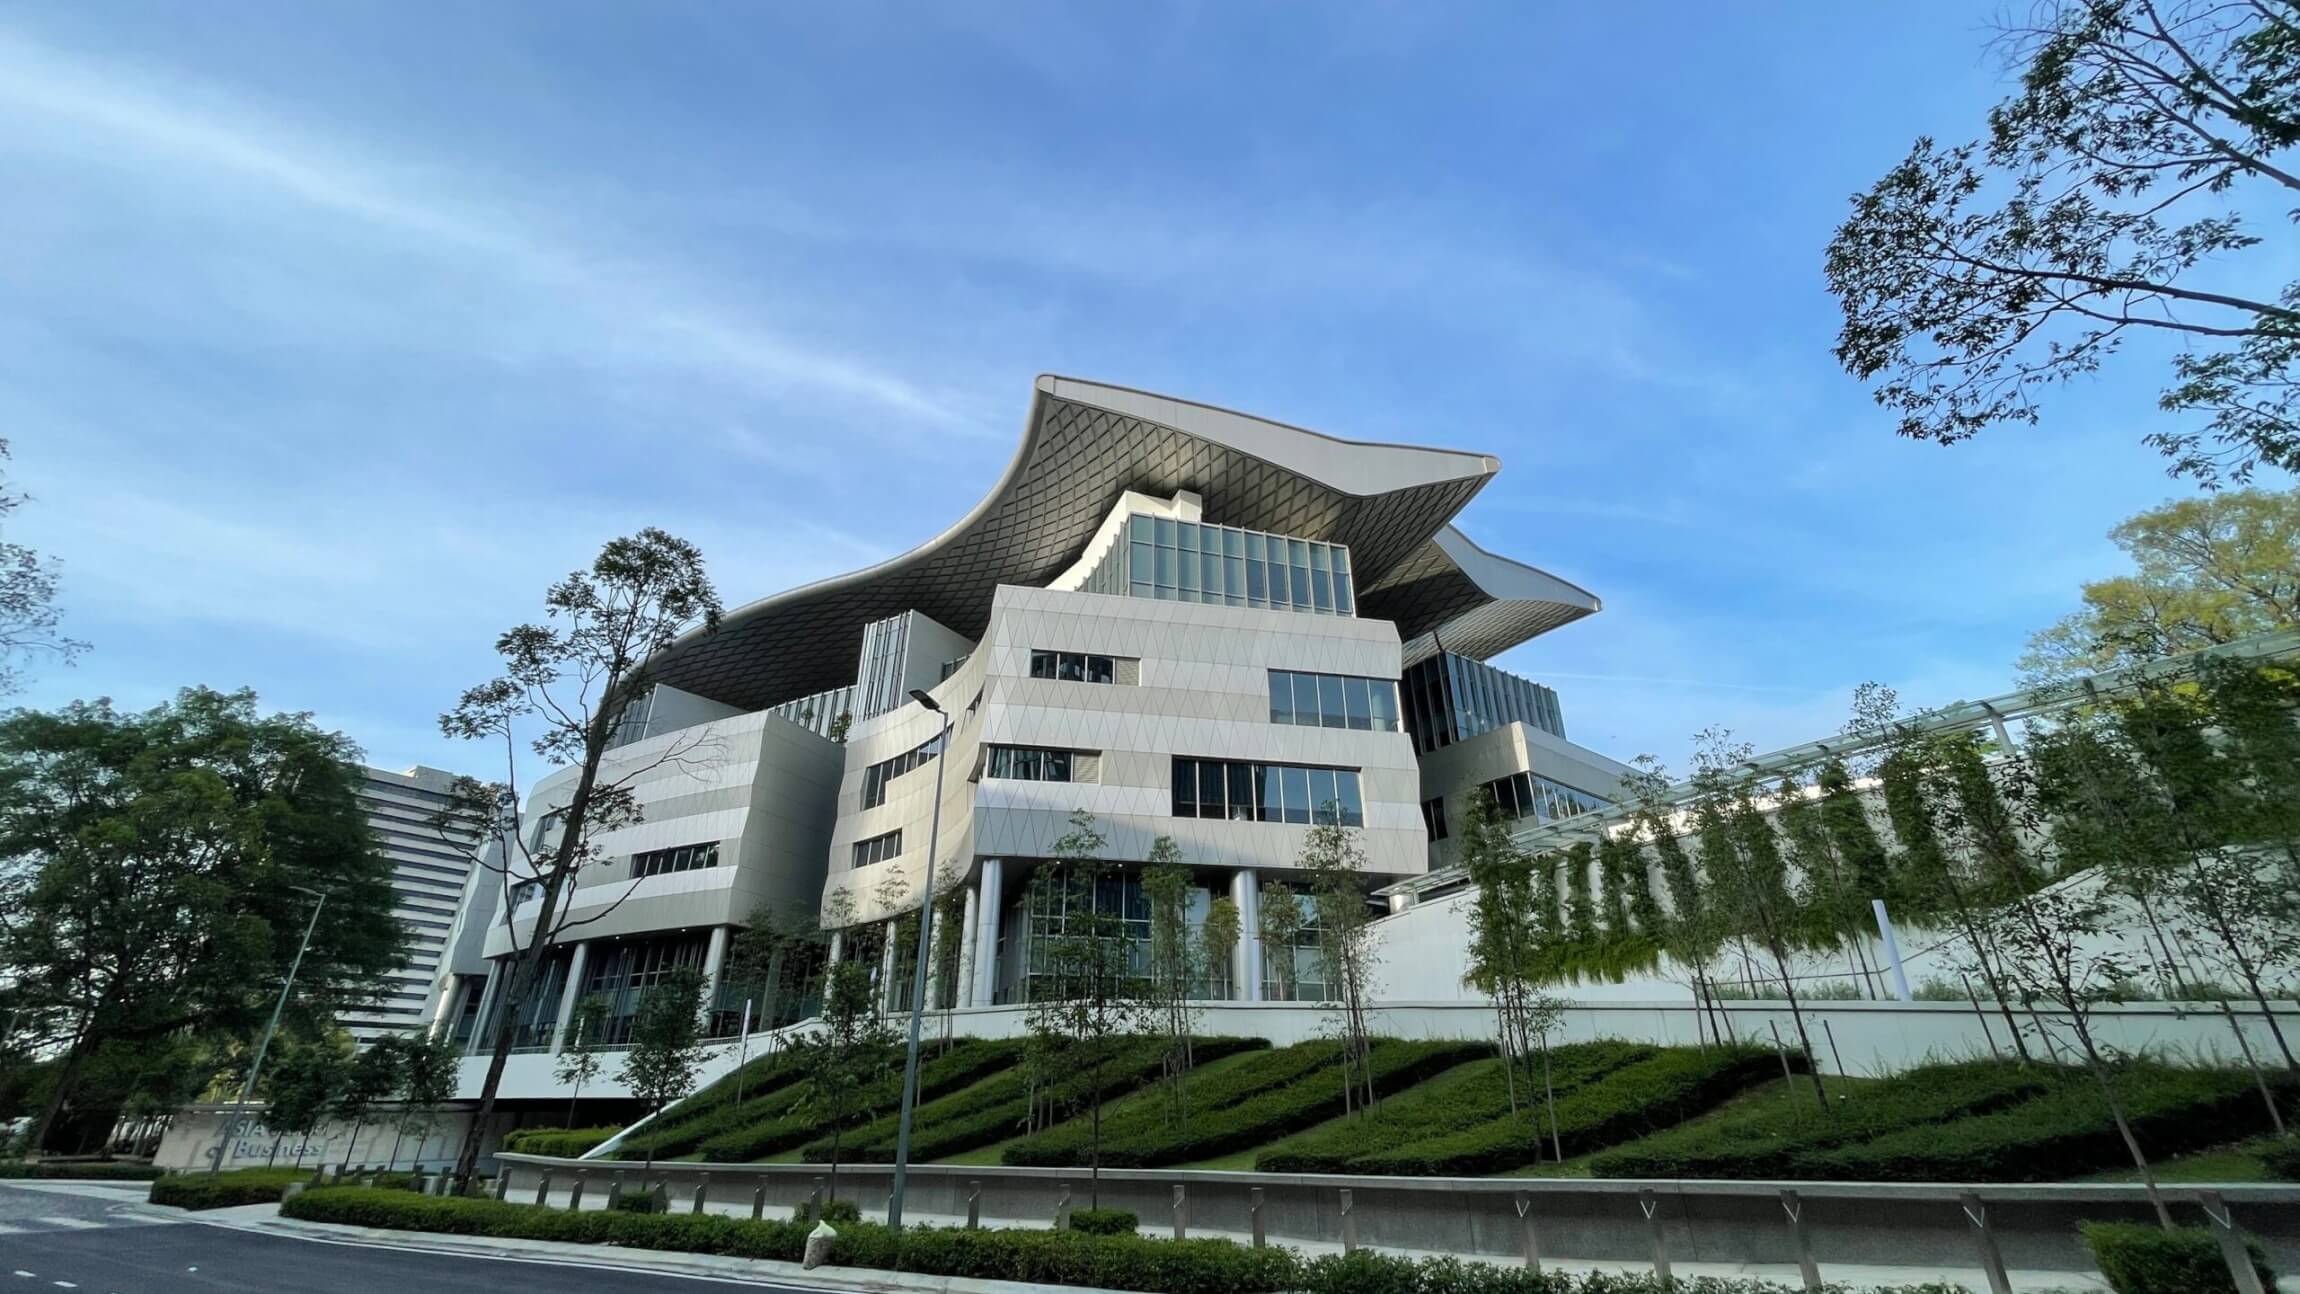 Malaysia-Based Asia School of Business Deploys YuJa Enterprise Video Platform Campuswide